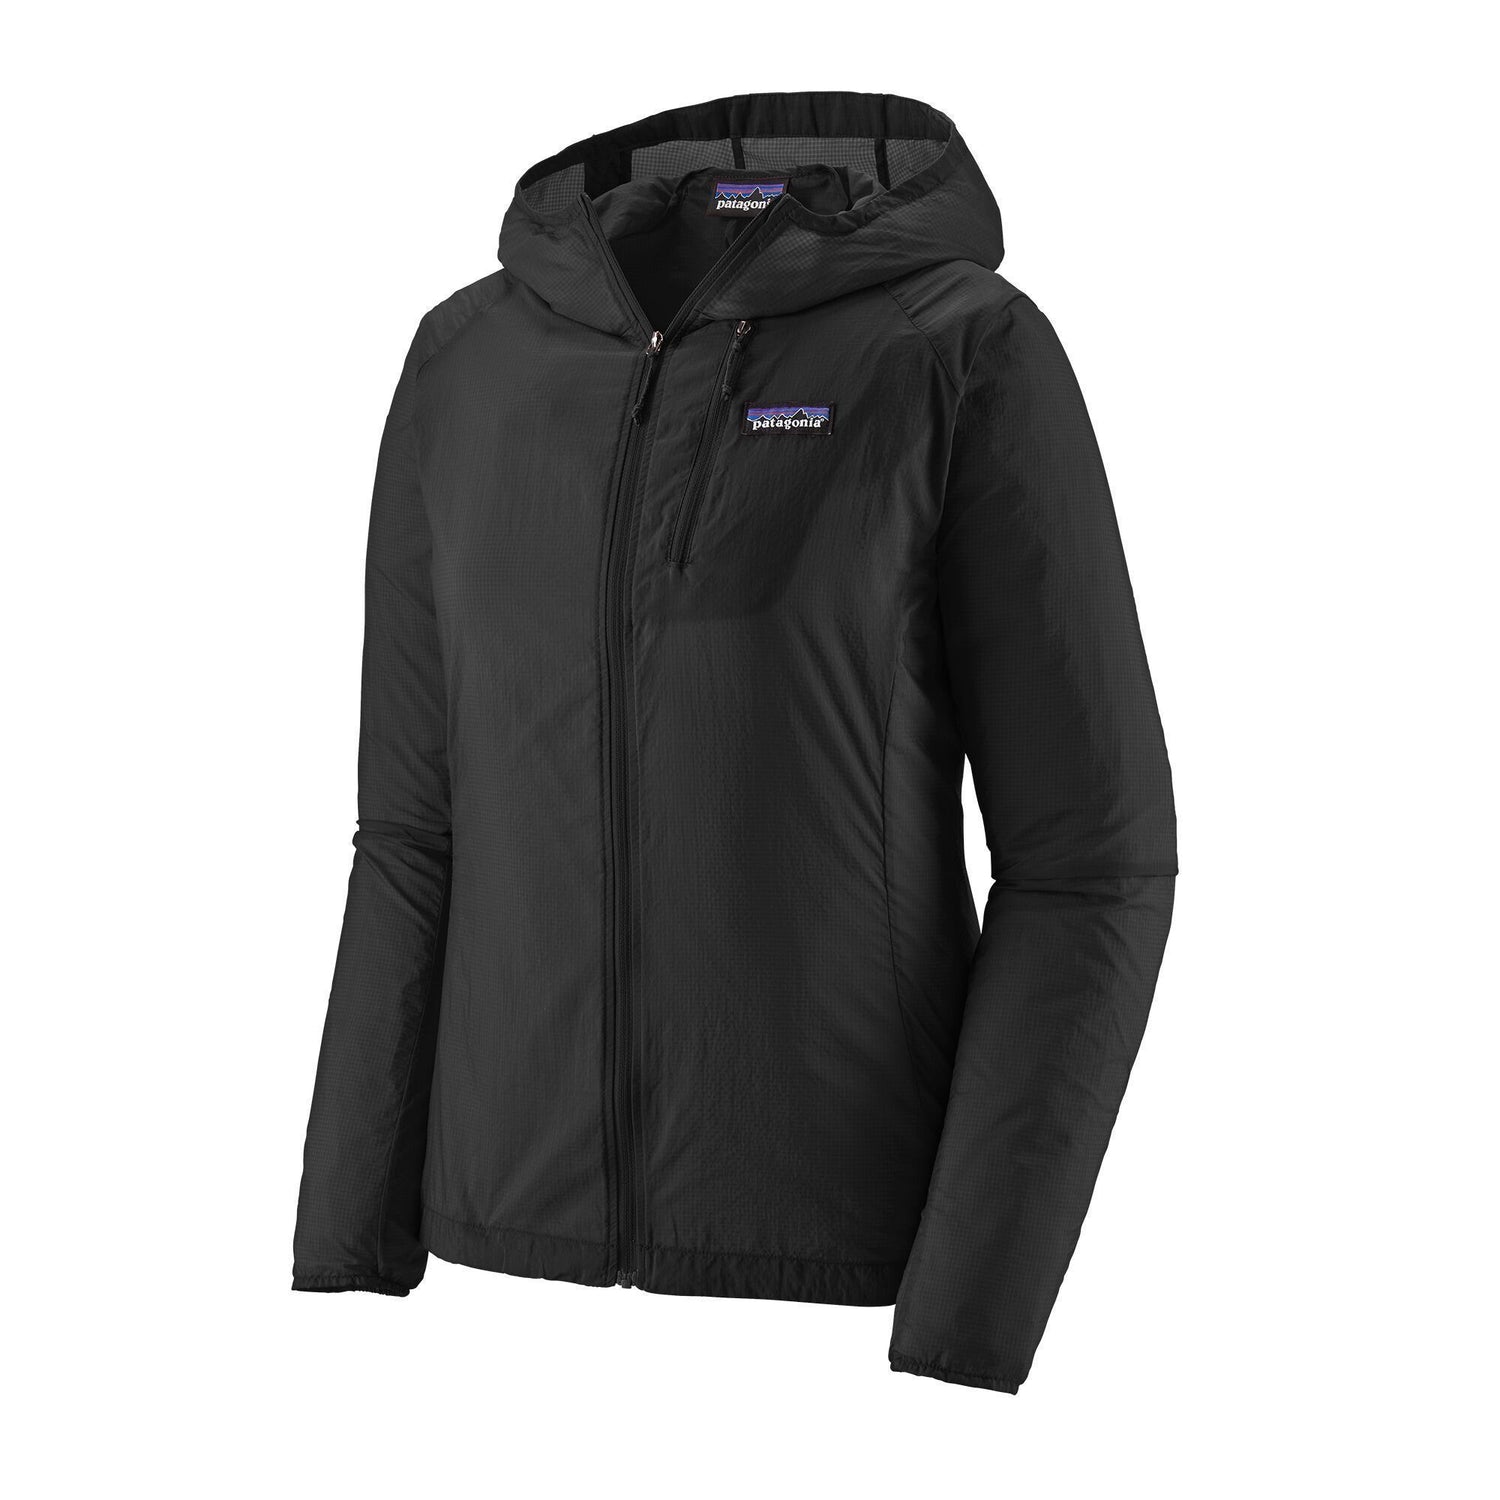 Patagonia - W's Houdini® Jacket - 100% Recycled Nylon - Weekendbee - sustainable sportswear